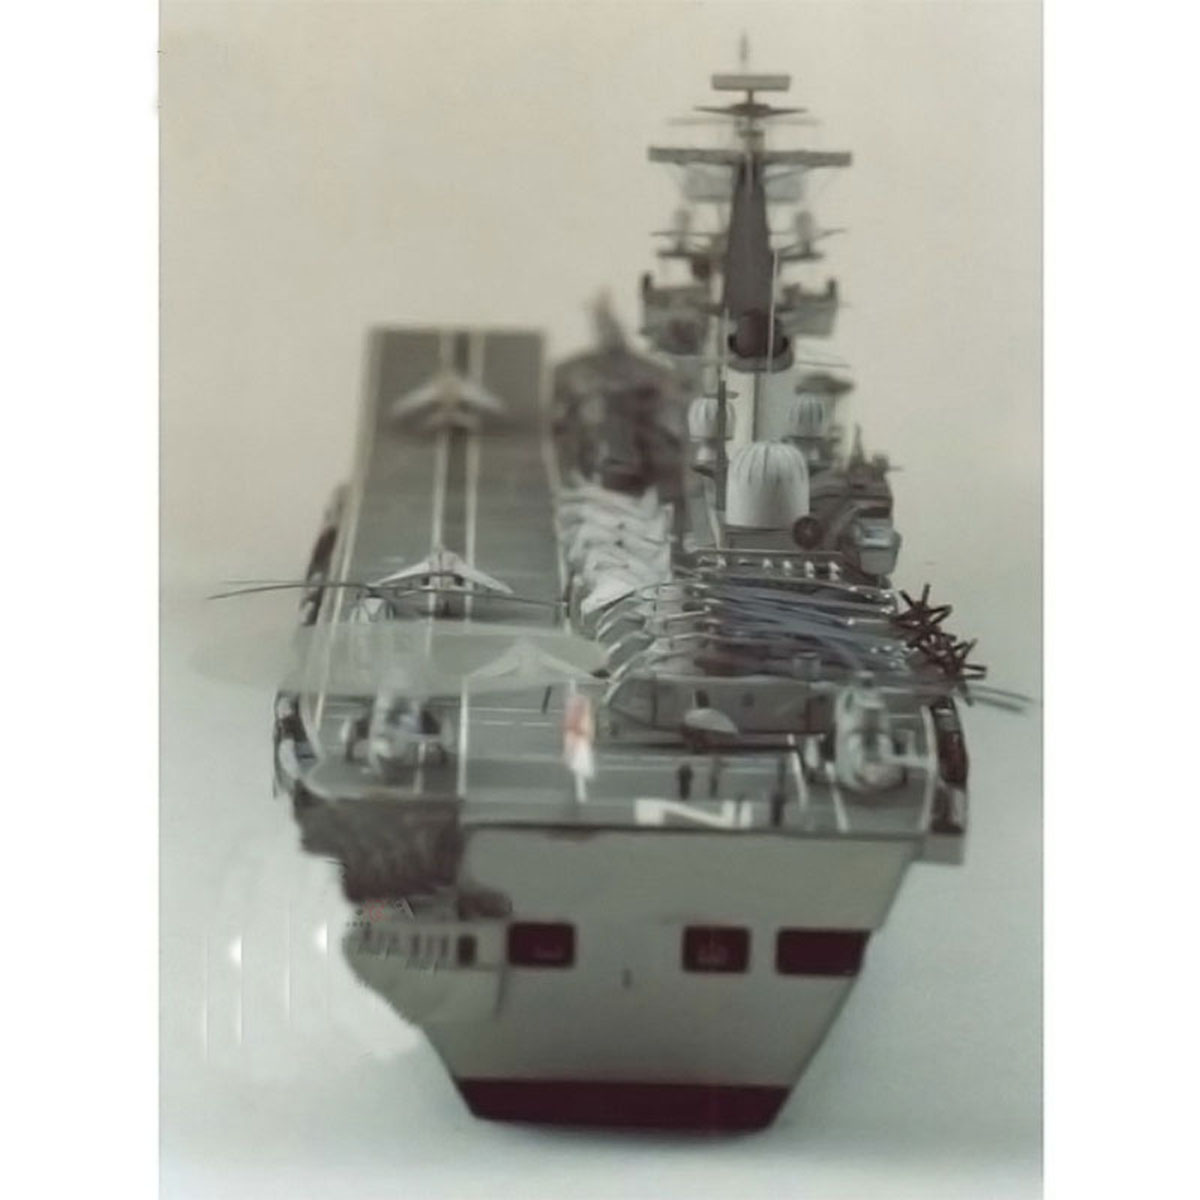 1400-3D-Paper-Model-DIY-England-Invincible-Class-Aircraft-Carrier-Ship-Boat-Kit-Sailing-Boats-Model-1560804